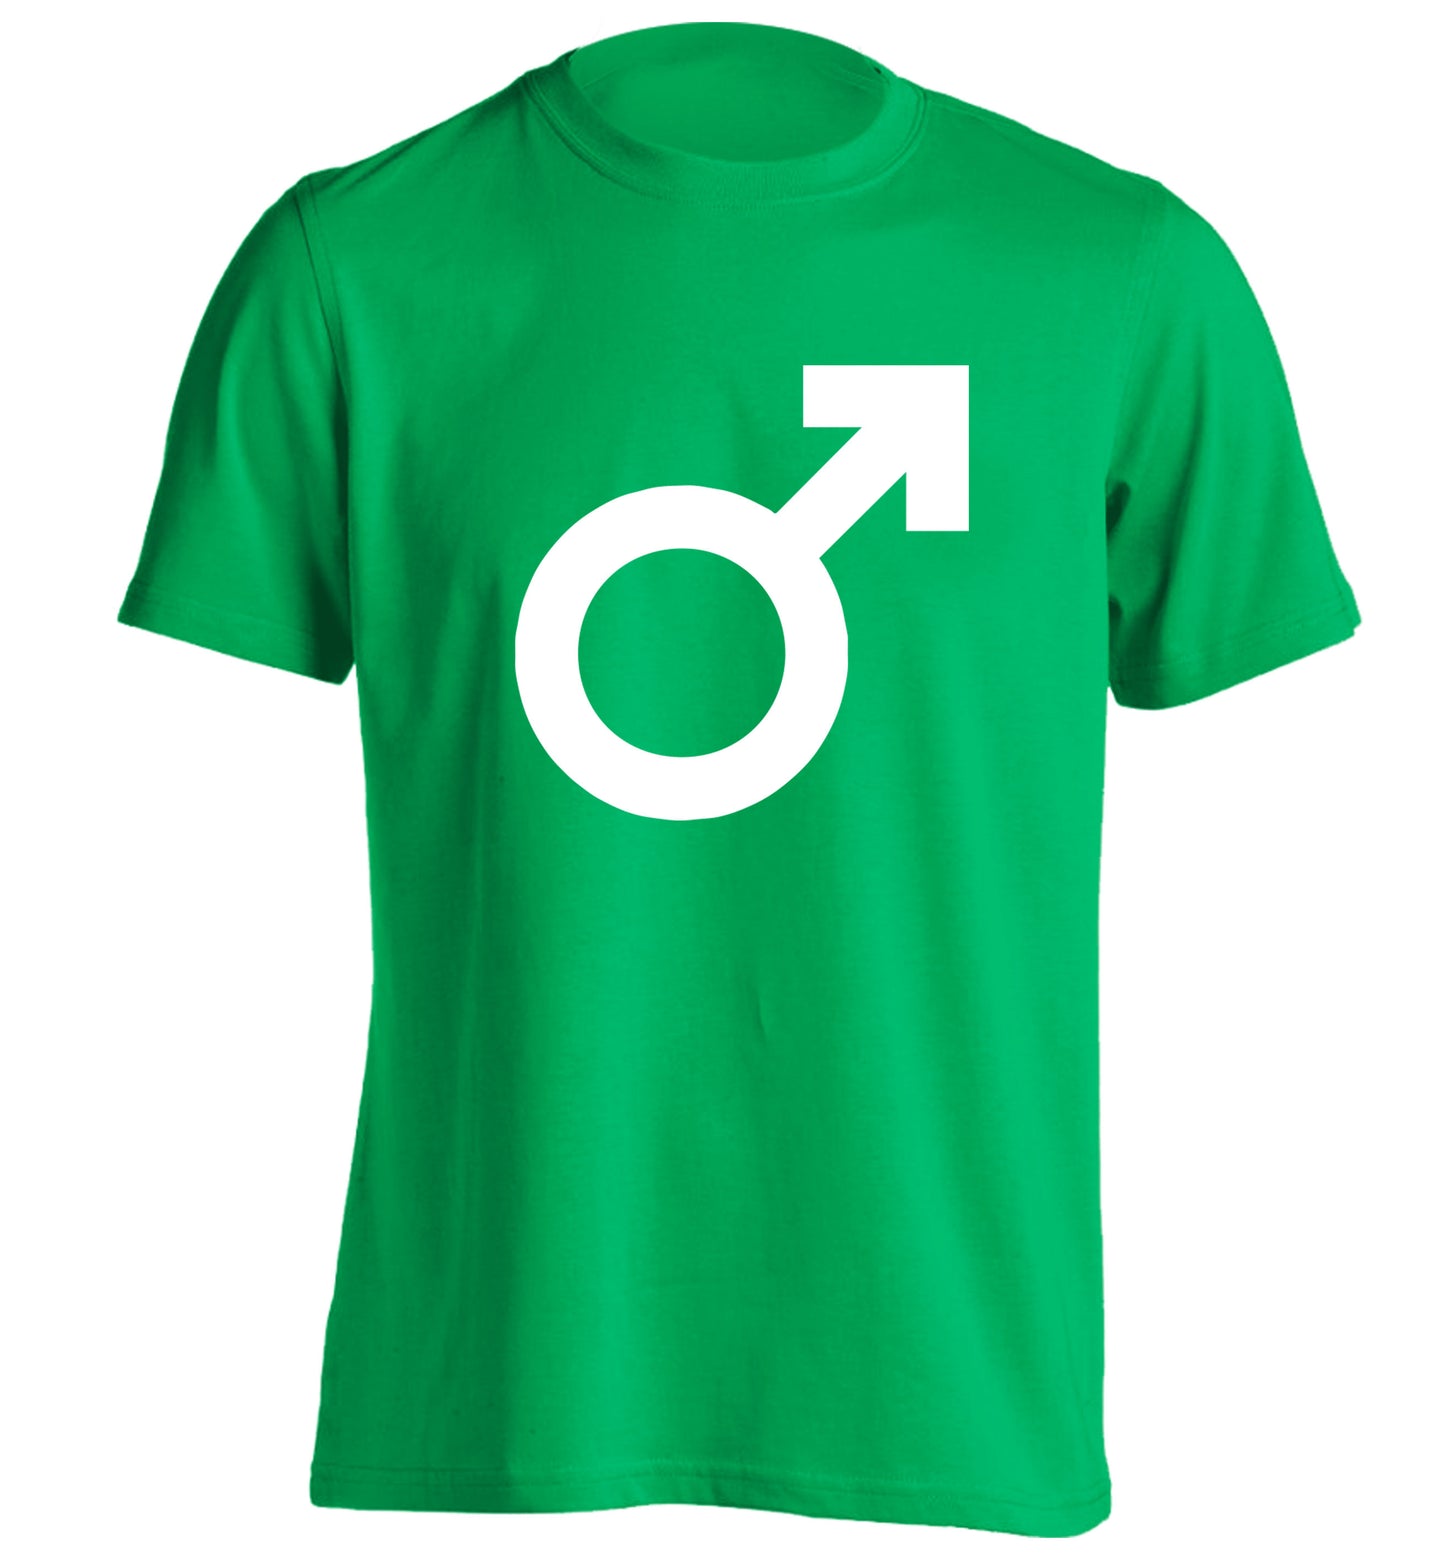 Male symbol large adults unisex green Tshirt 2XL